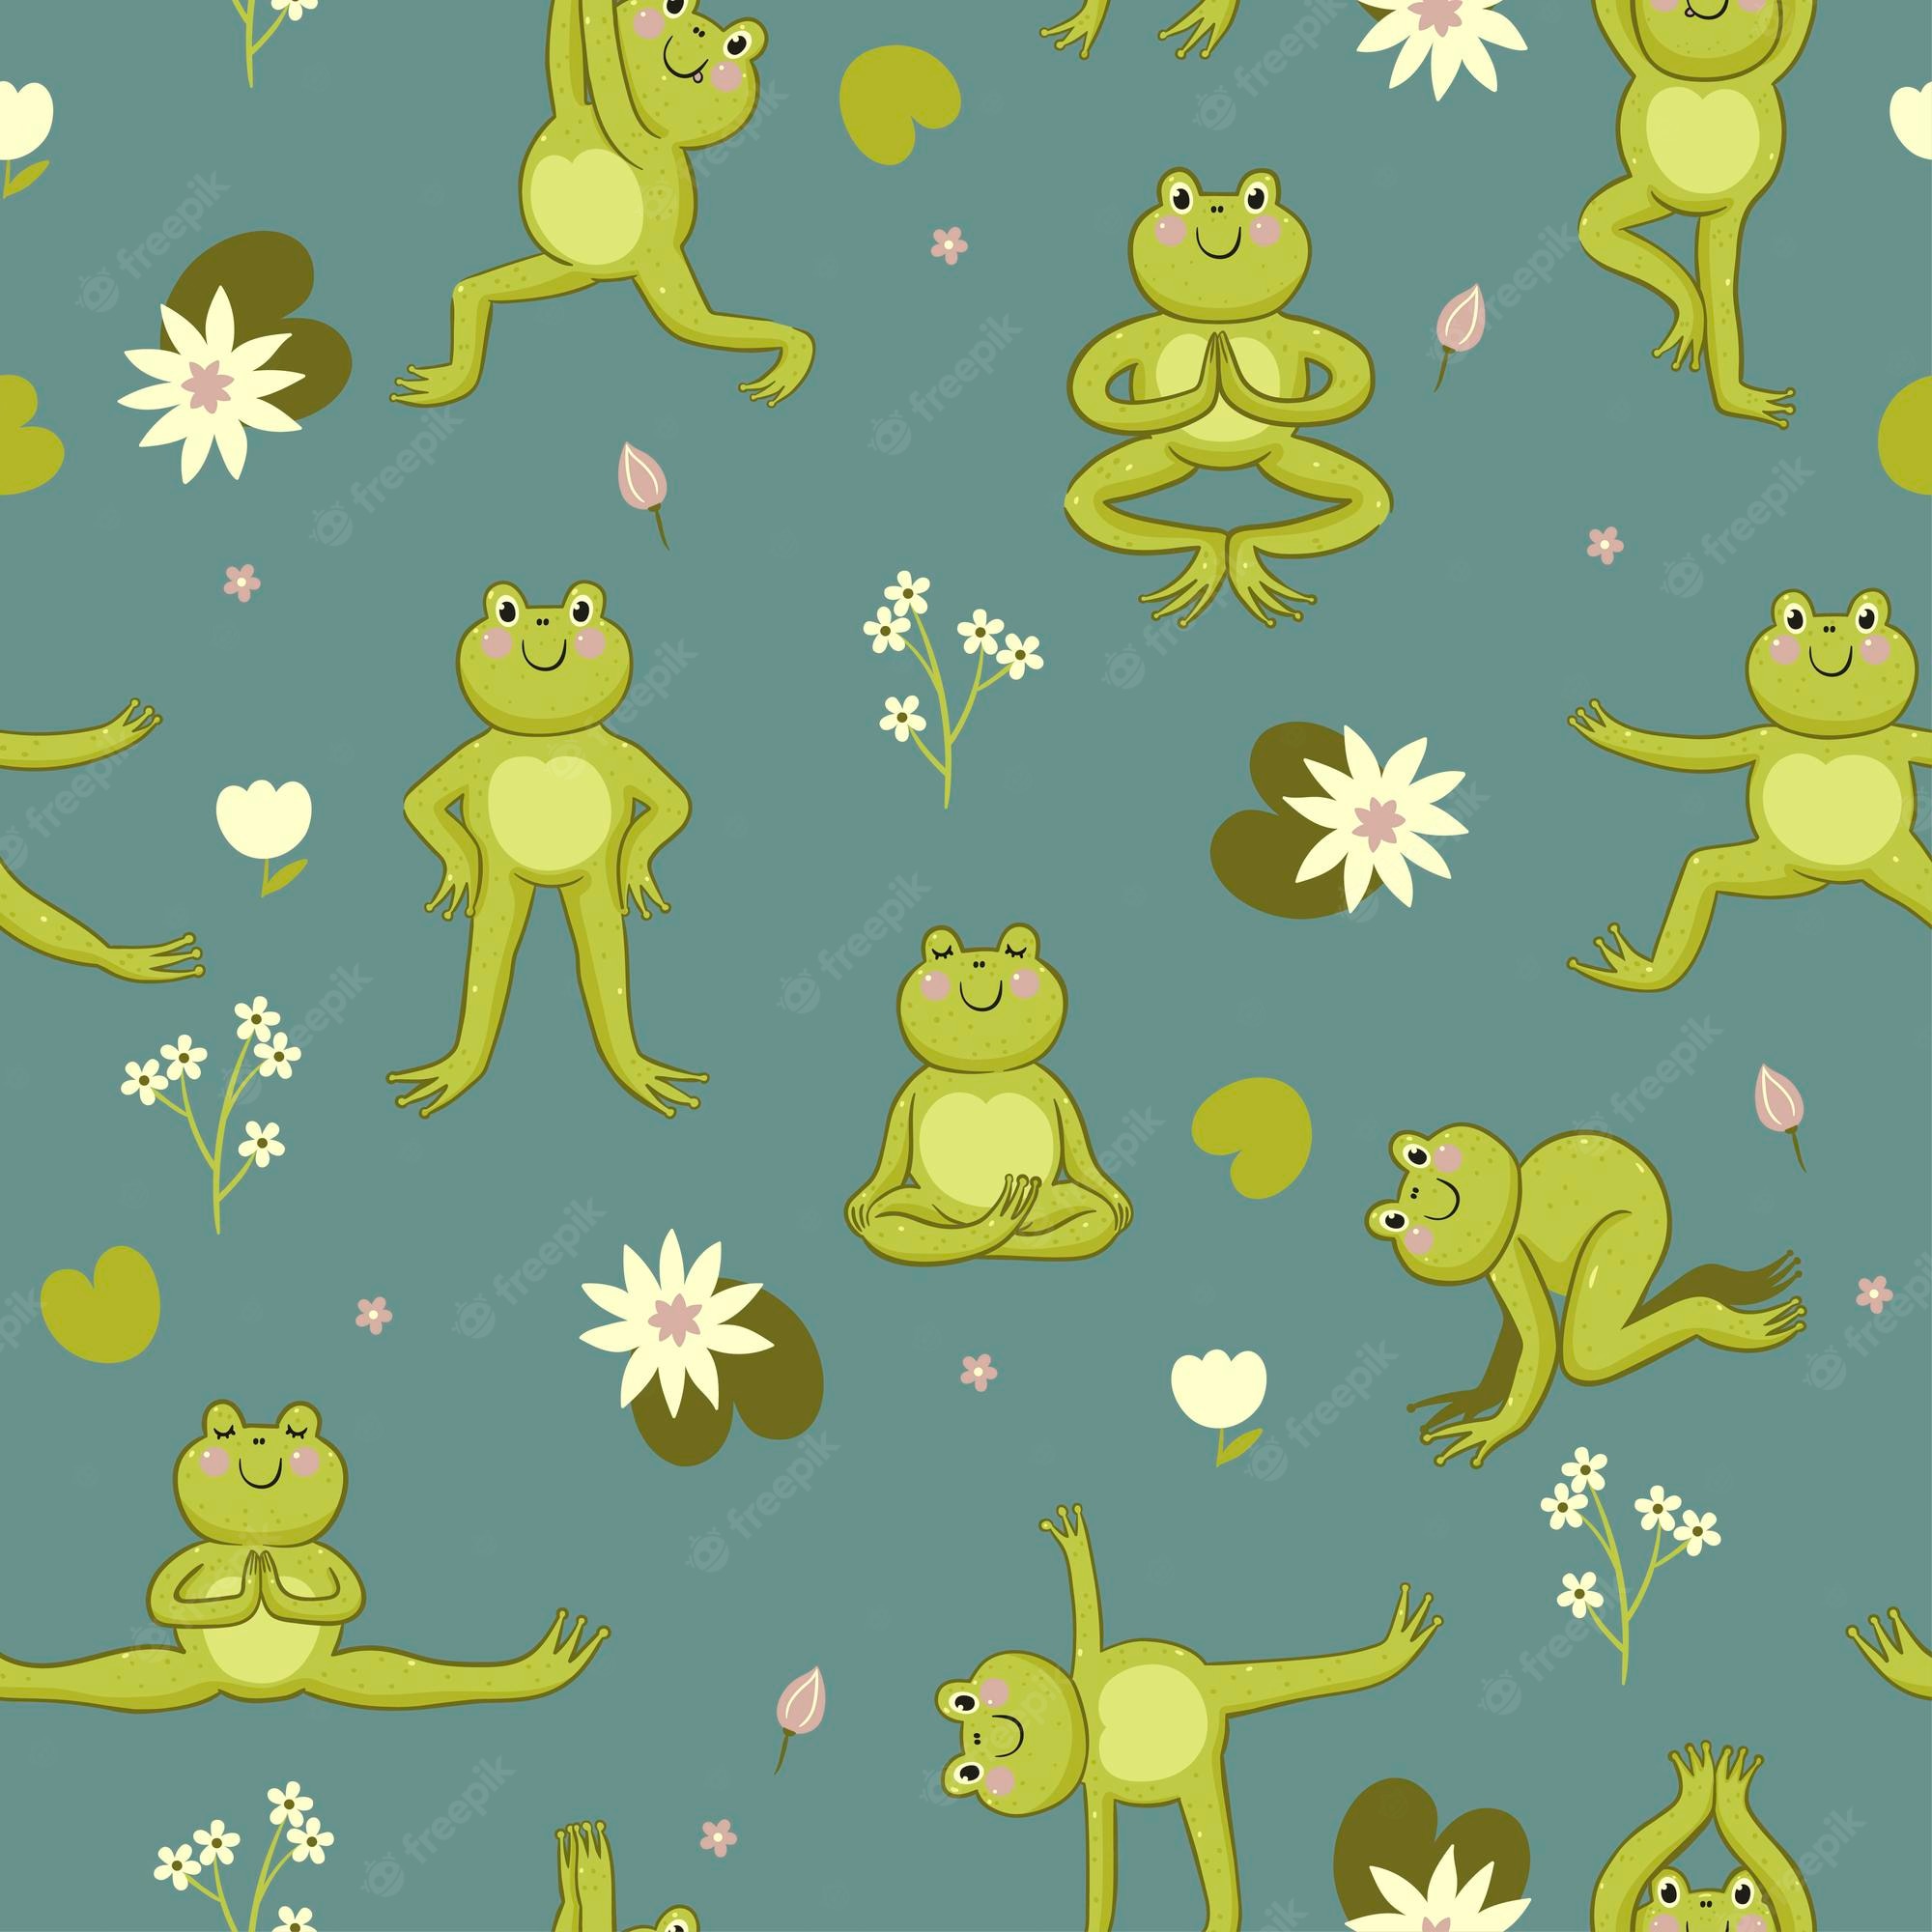 Frog Wallpaper Image